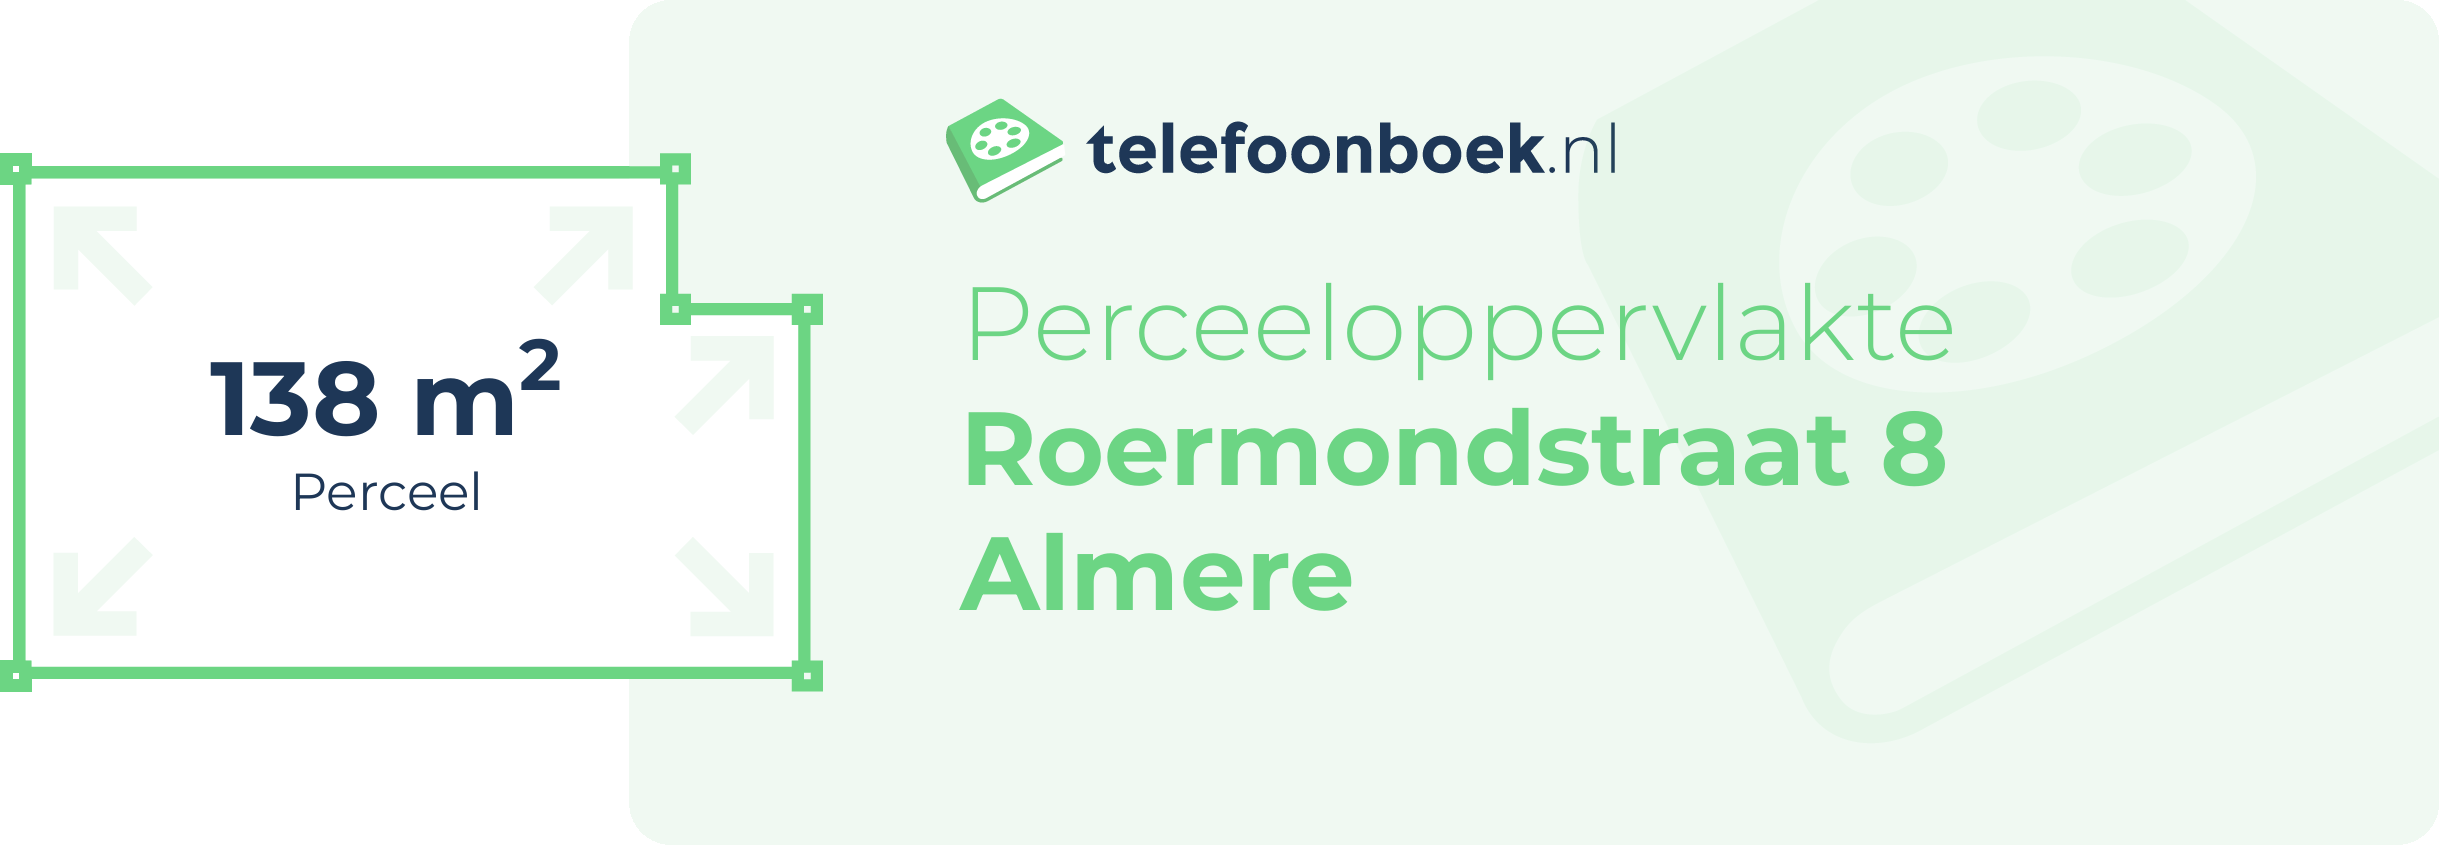 Perceeloppervlakte Roermondstraat 8 Almere